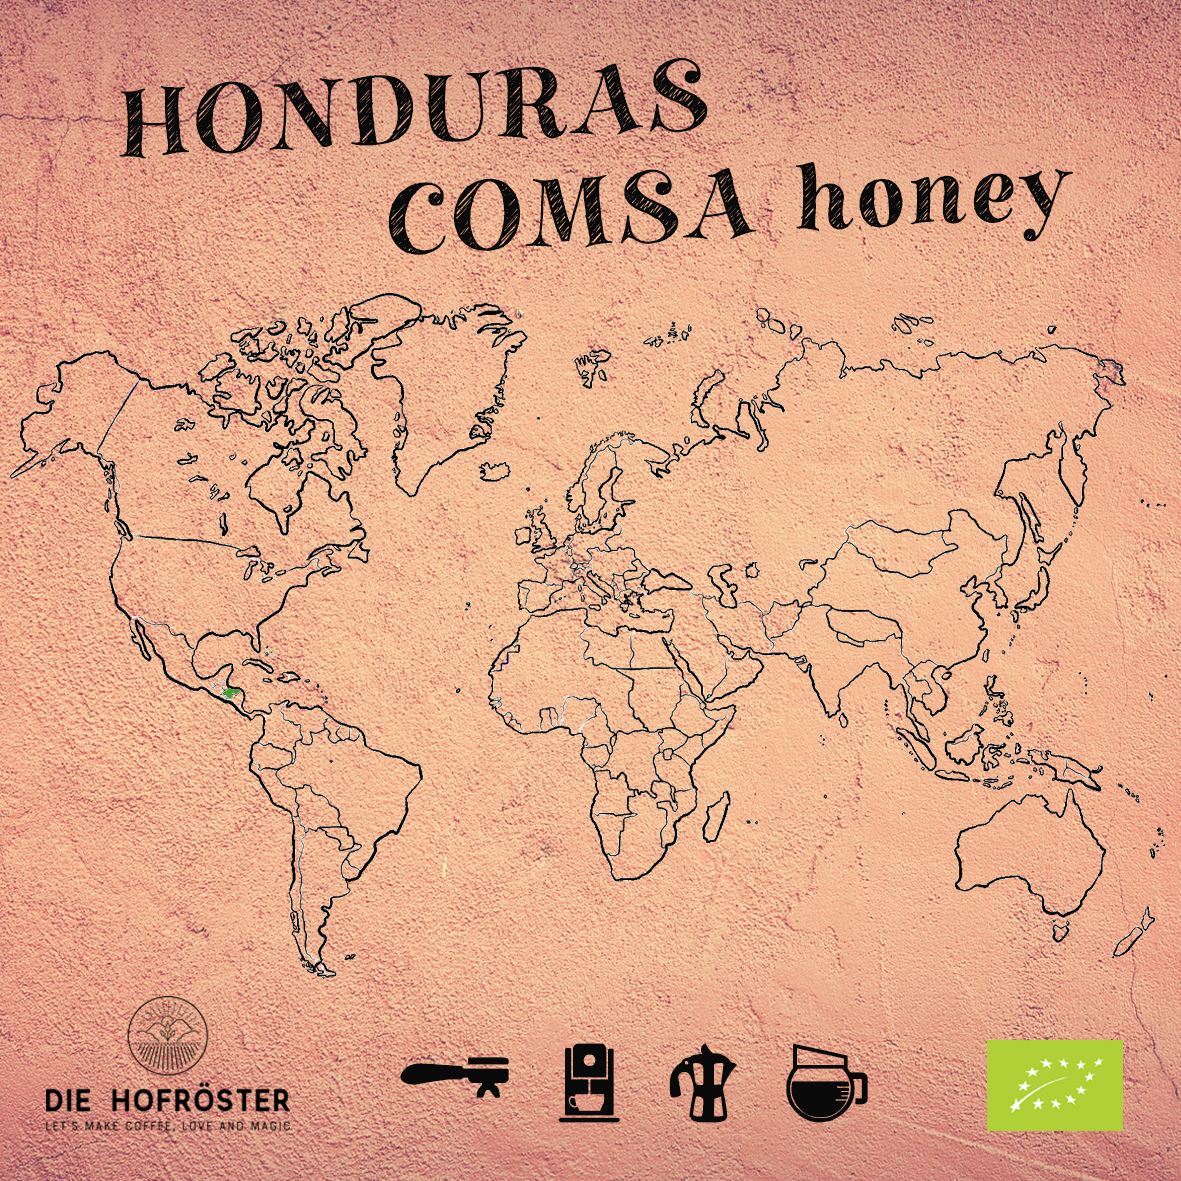 Honduras COMSA honey